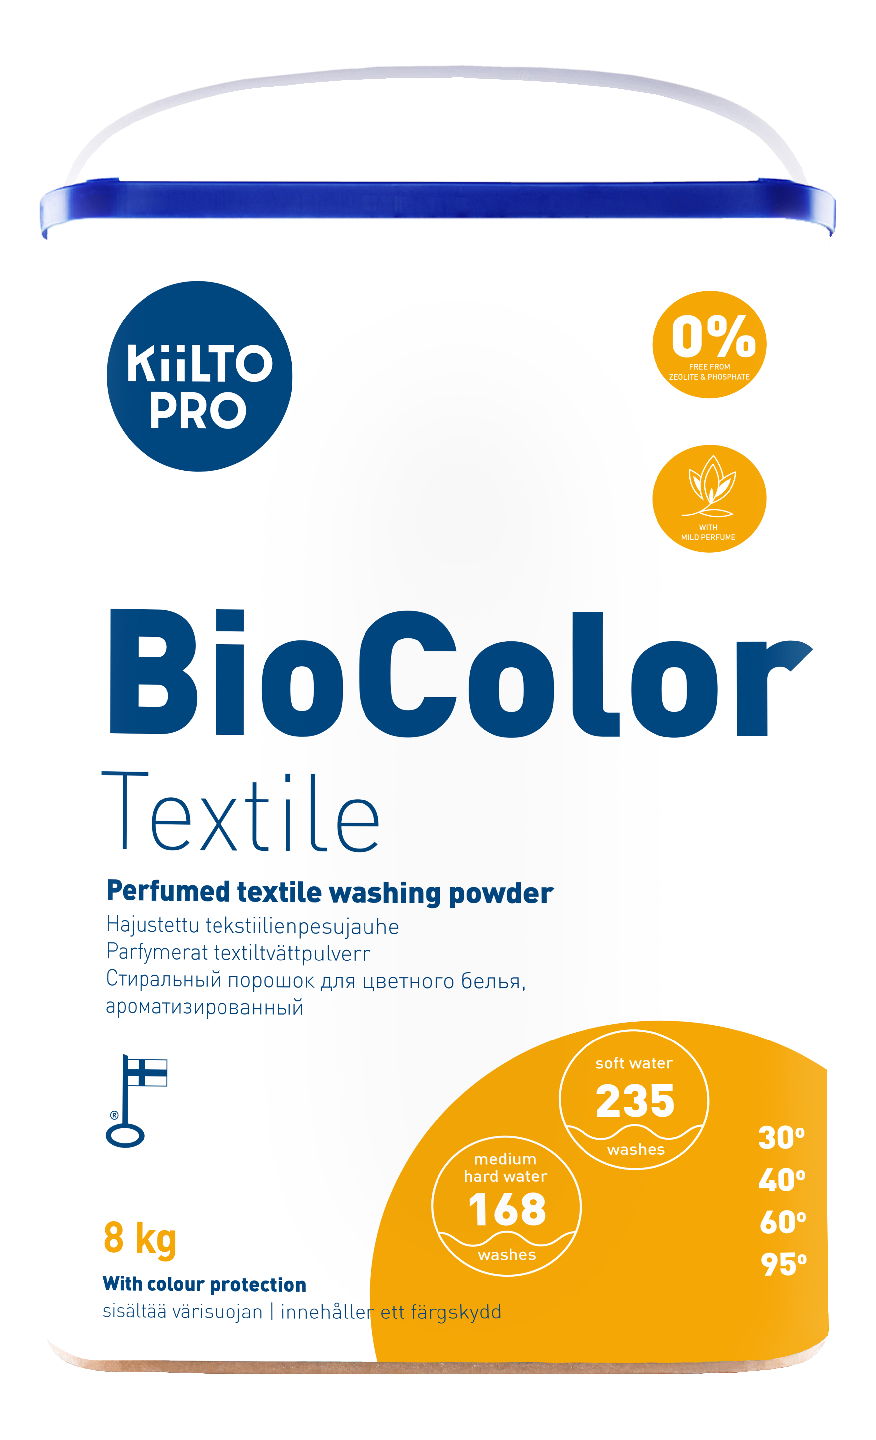 KiiltoPro BioColor Textile 8kg hajustettu tekstiilienpesujauhe